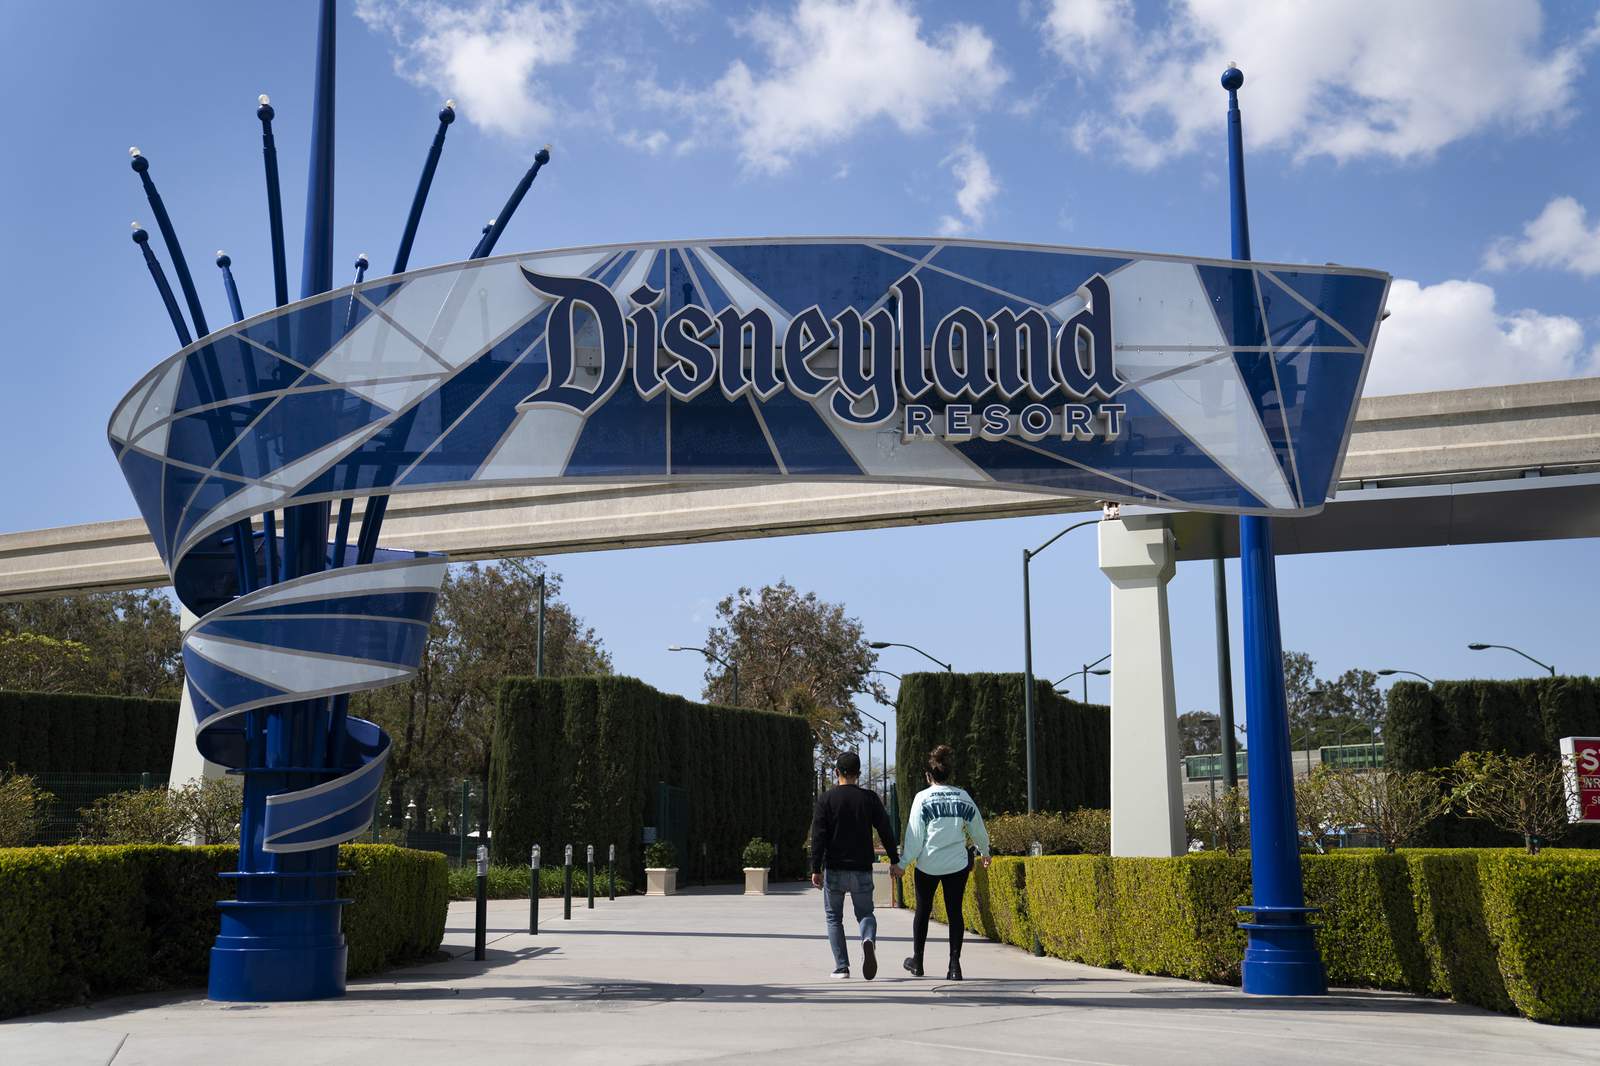 Disneyland Avengers Campus gets June debut after long delay